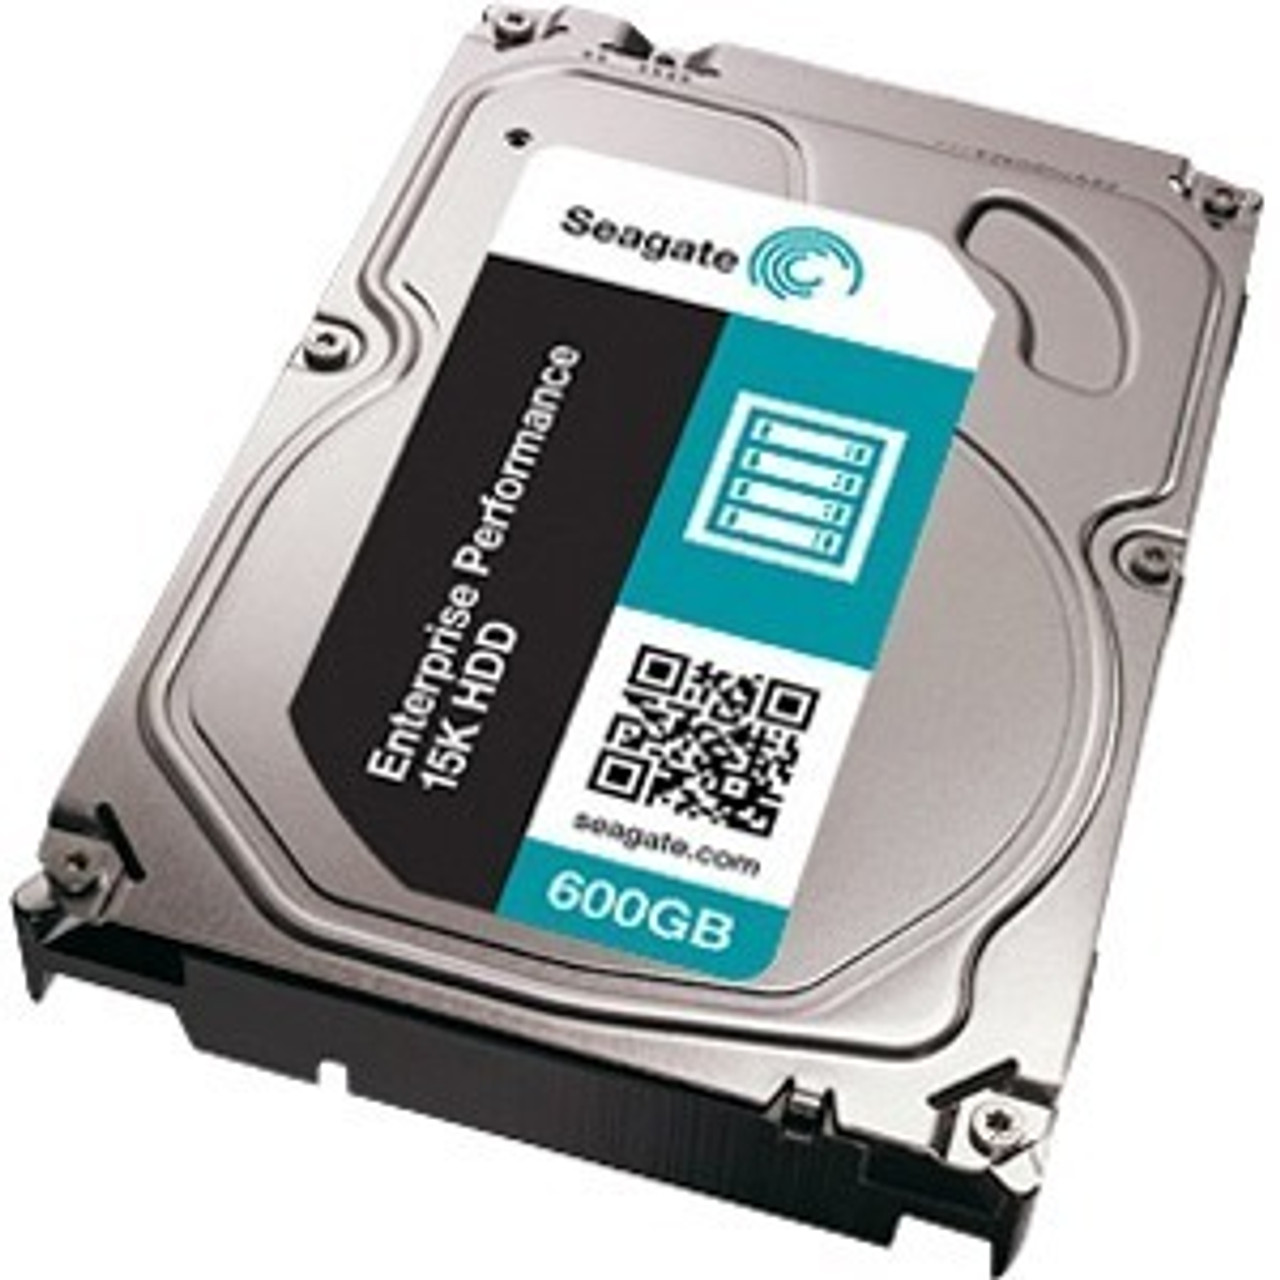 Seagate - IMSourcing Certified Pre-Owned ST600MP0005 600 GB Hard Drive - 2.5" Internal - SAS (12Gb/s SAS) -  MFR P/N ST600MP0005-RF